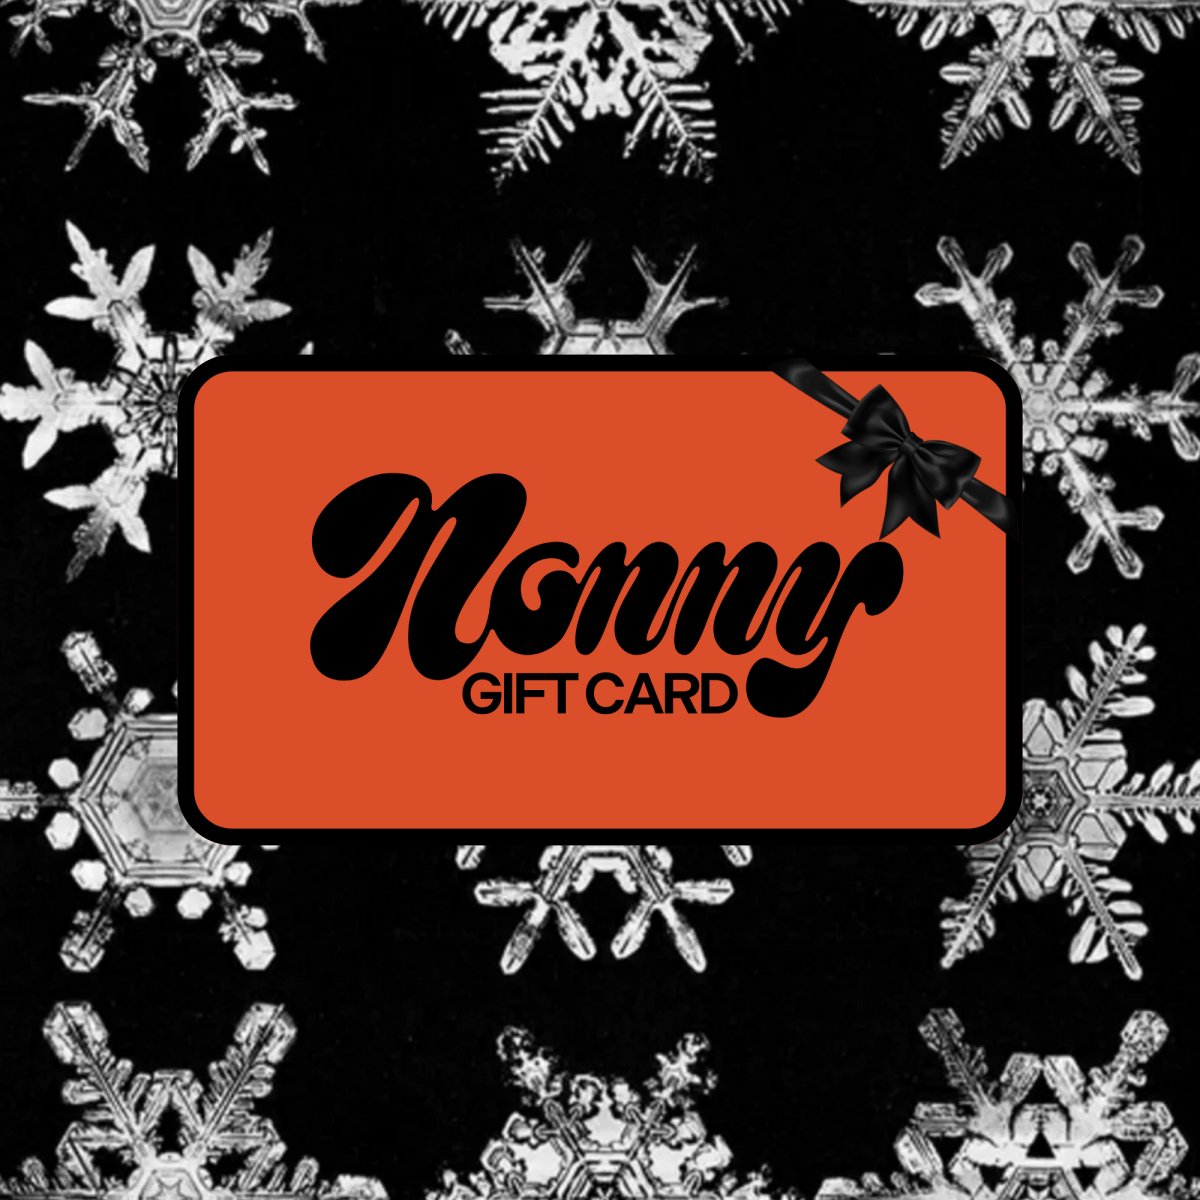 NONNY GIFT CARD - Nonny Beer